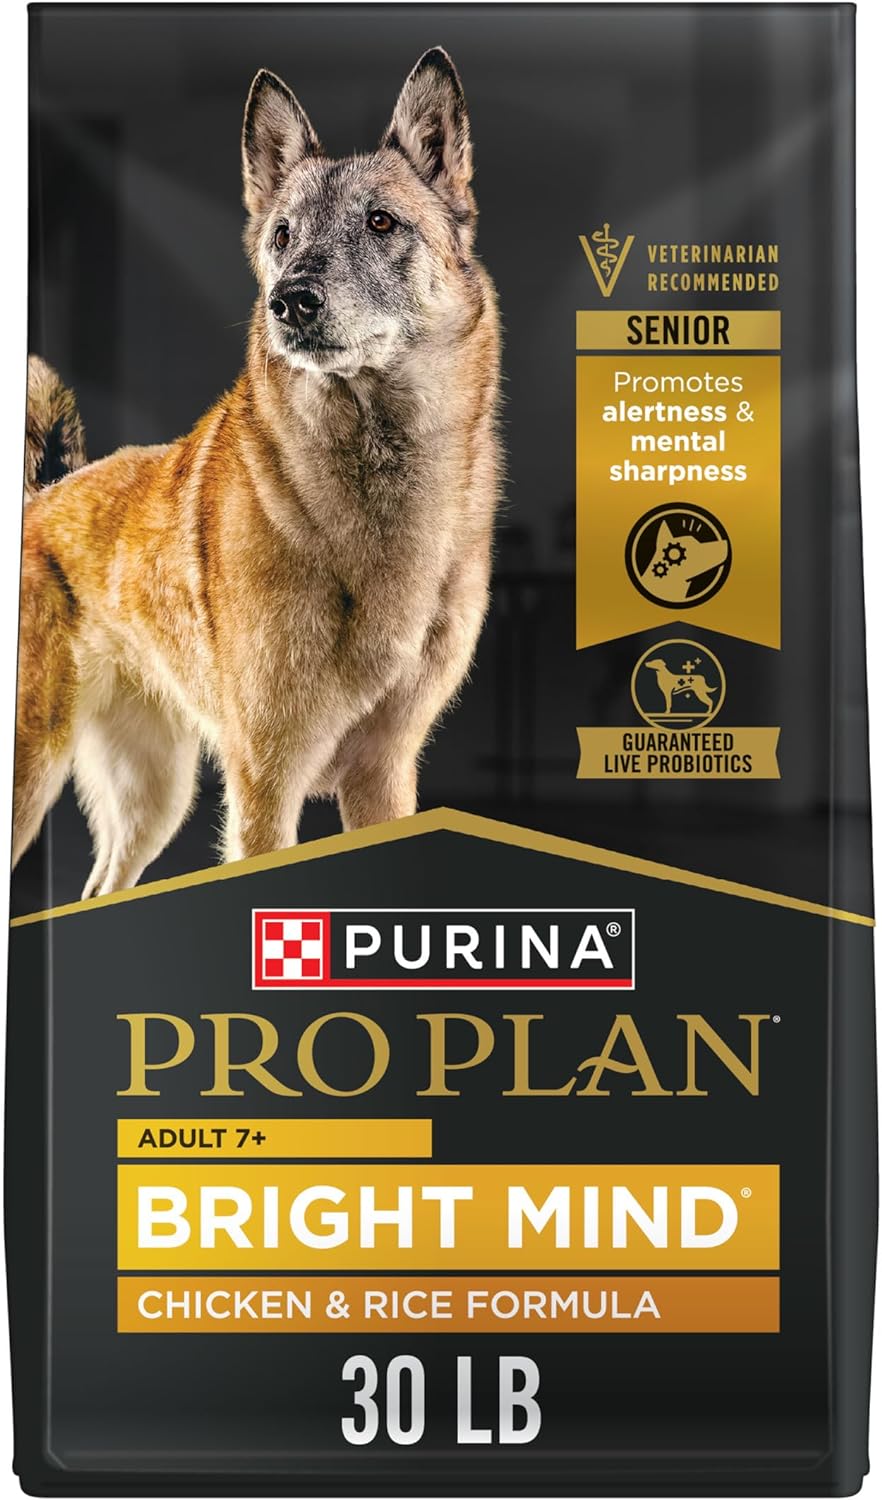 Purina Pro Plan Senior Dog Food With Probiotics for Dogs, Bright Mind 7+ Chicken & Rice Formula - 30 lb. Bag